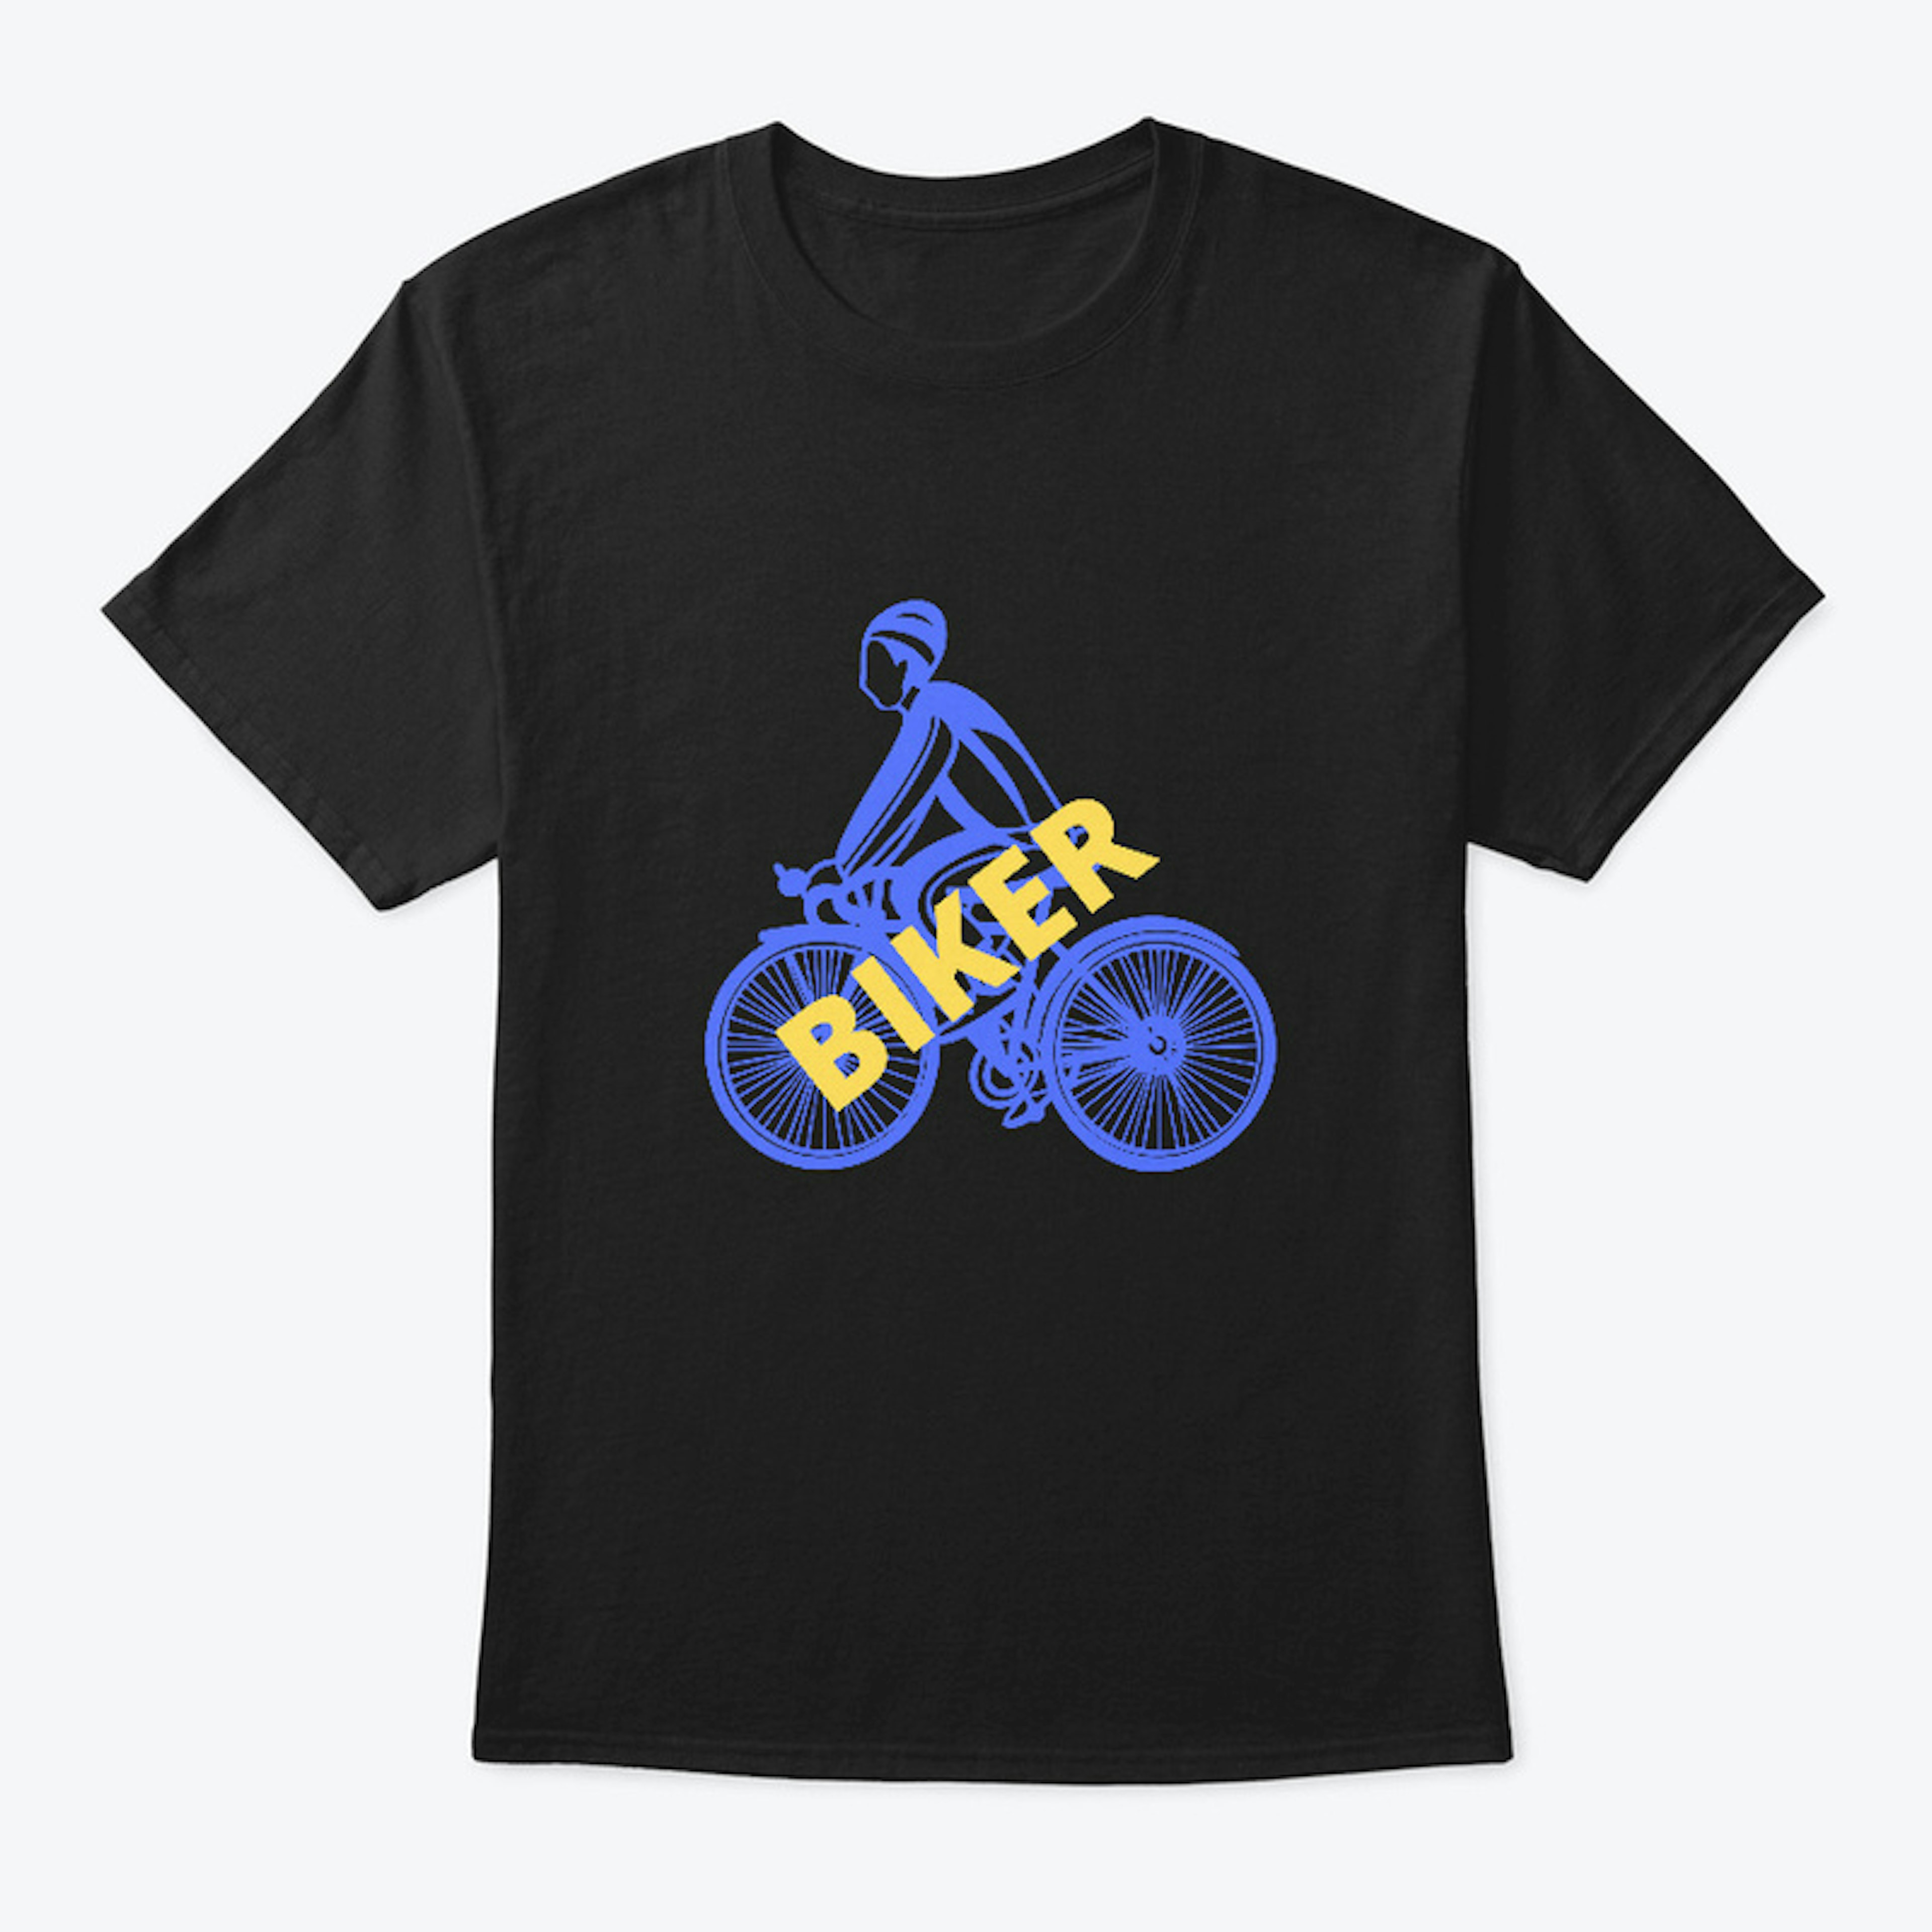 The Blue Biker